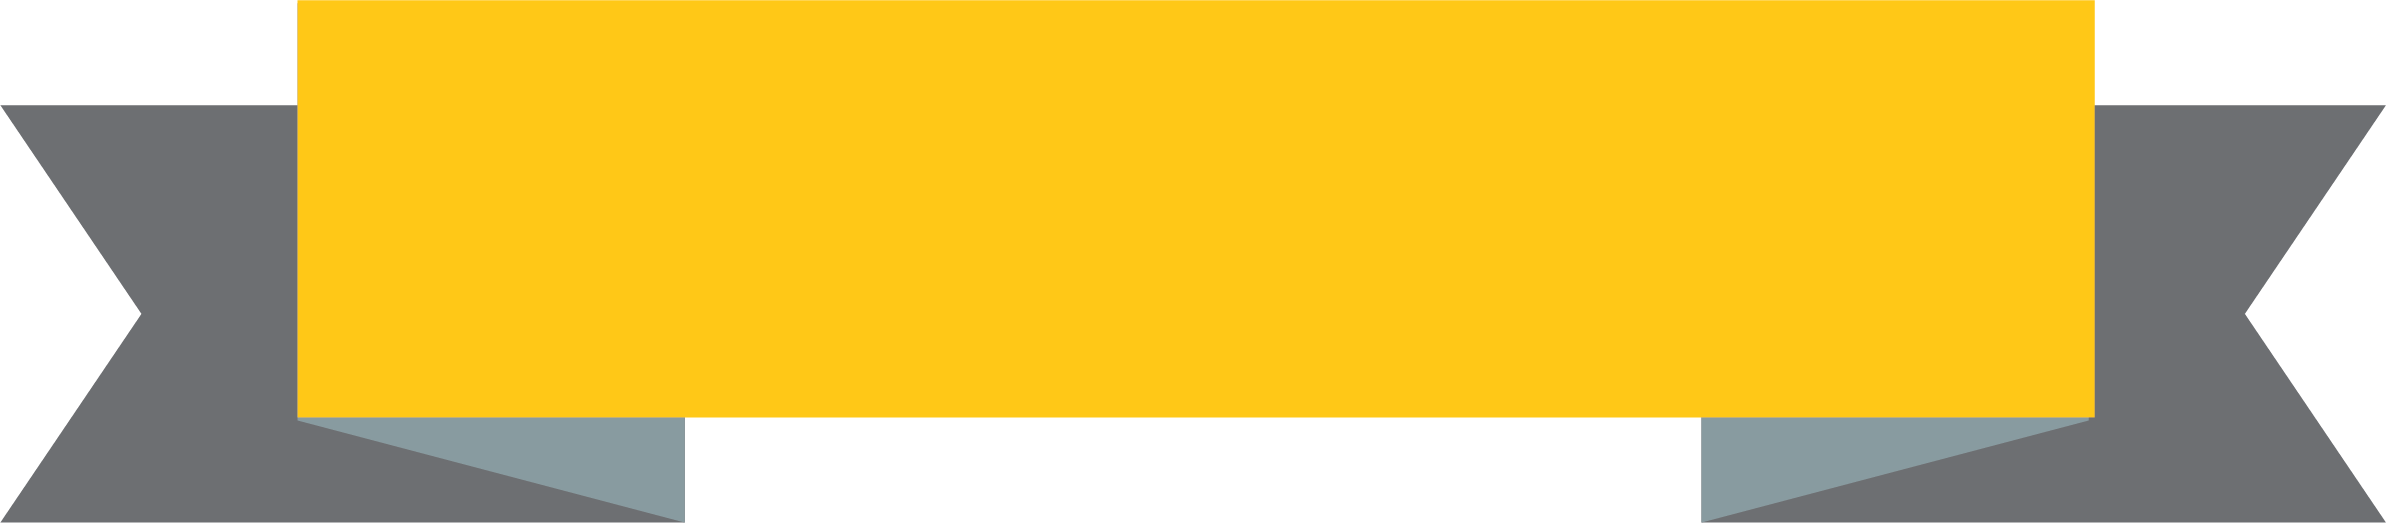 Image PNG de ruban jaune avec fond Transparent